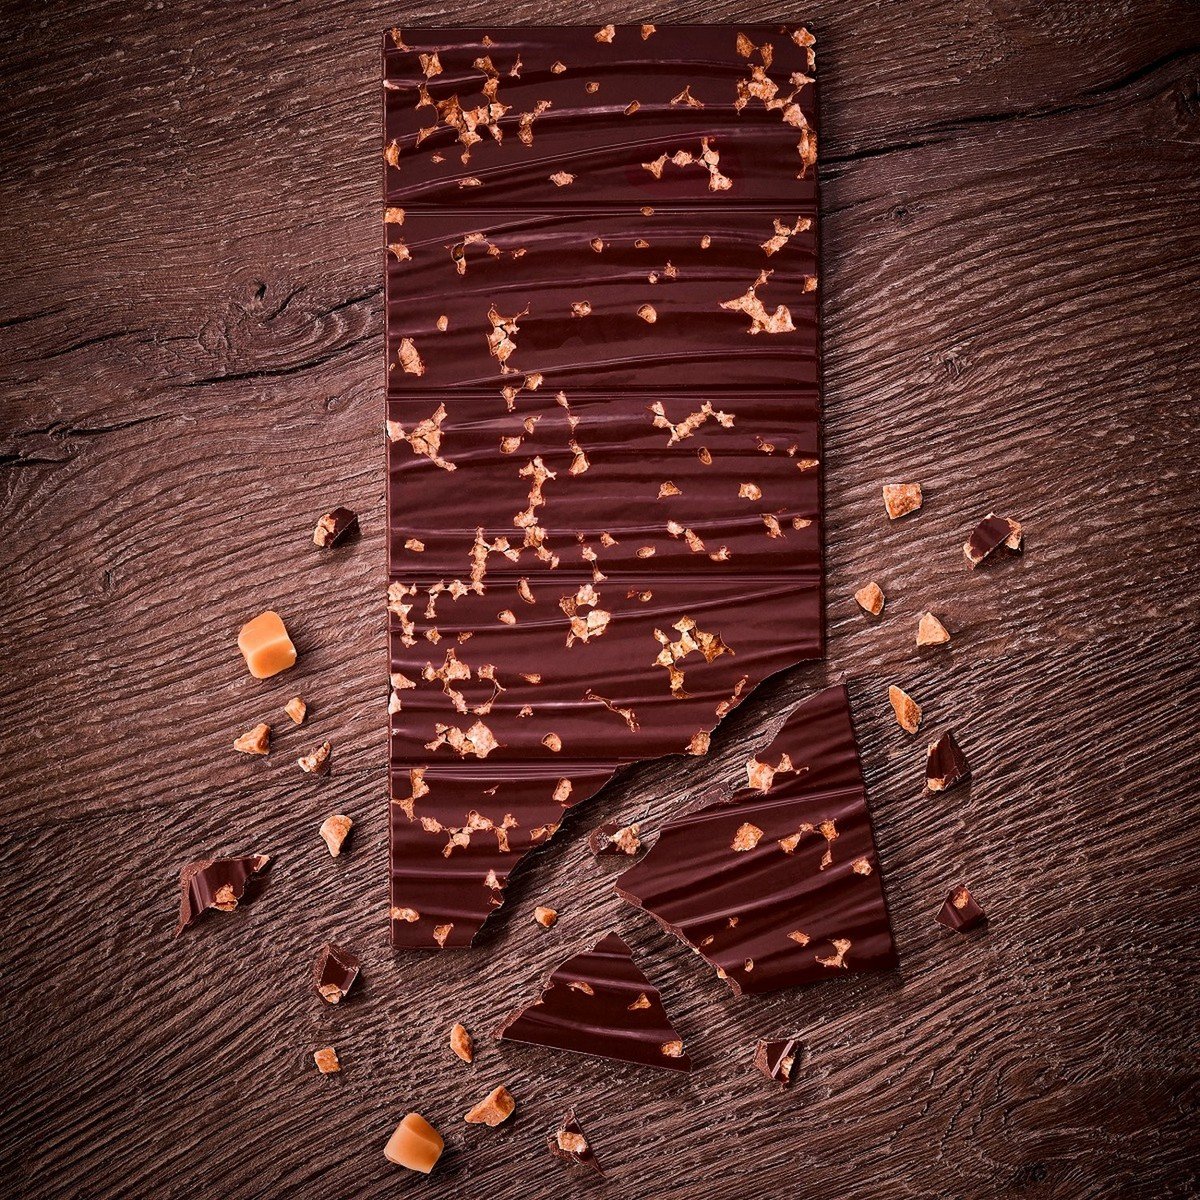 Nestle L'Atelier Dark Chocolate With Salted Caramel 115g